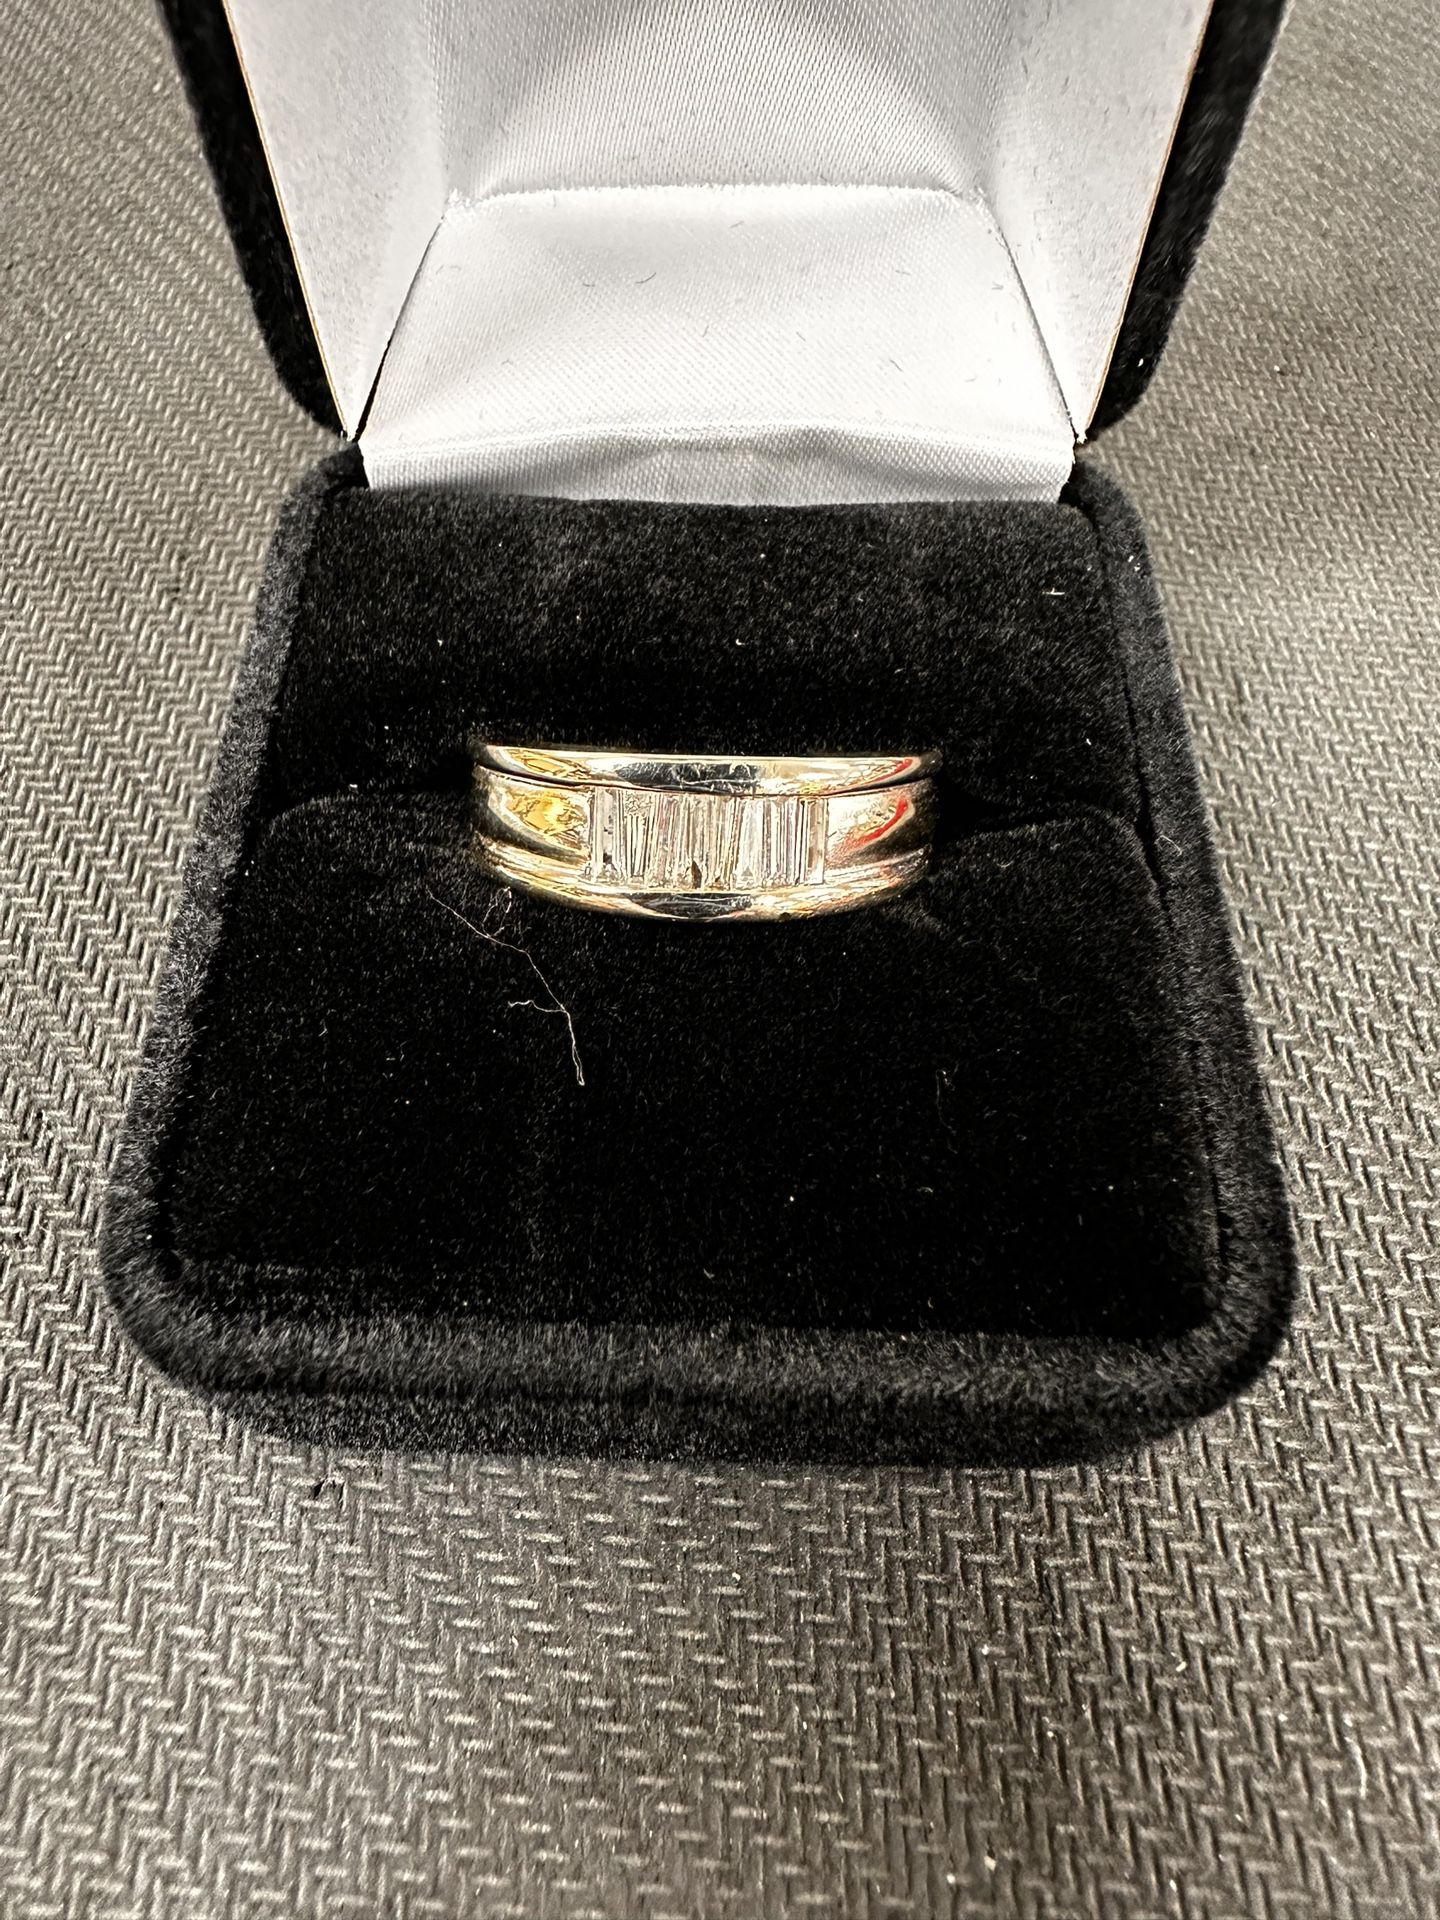 14k Diamond Ring White Gold